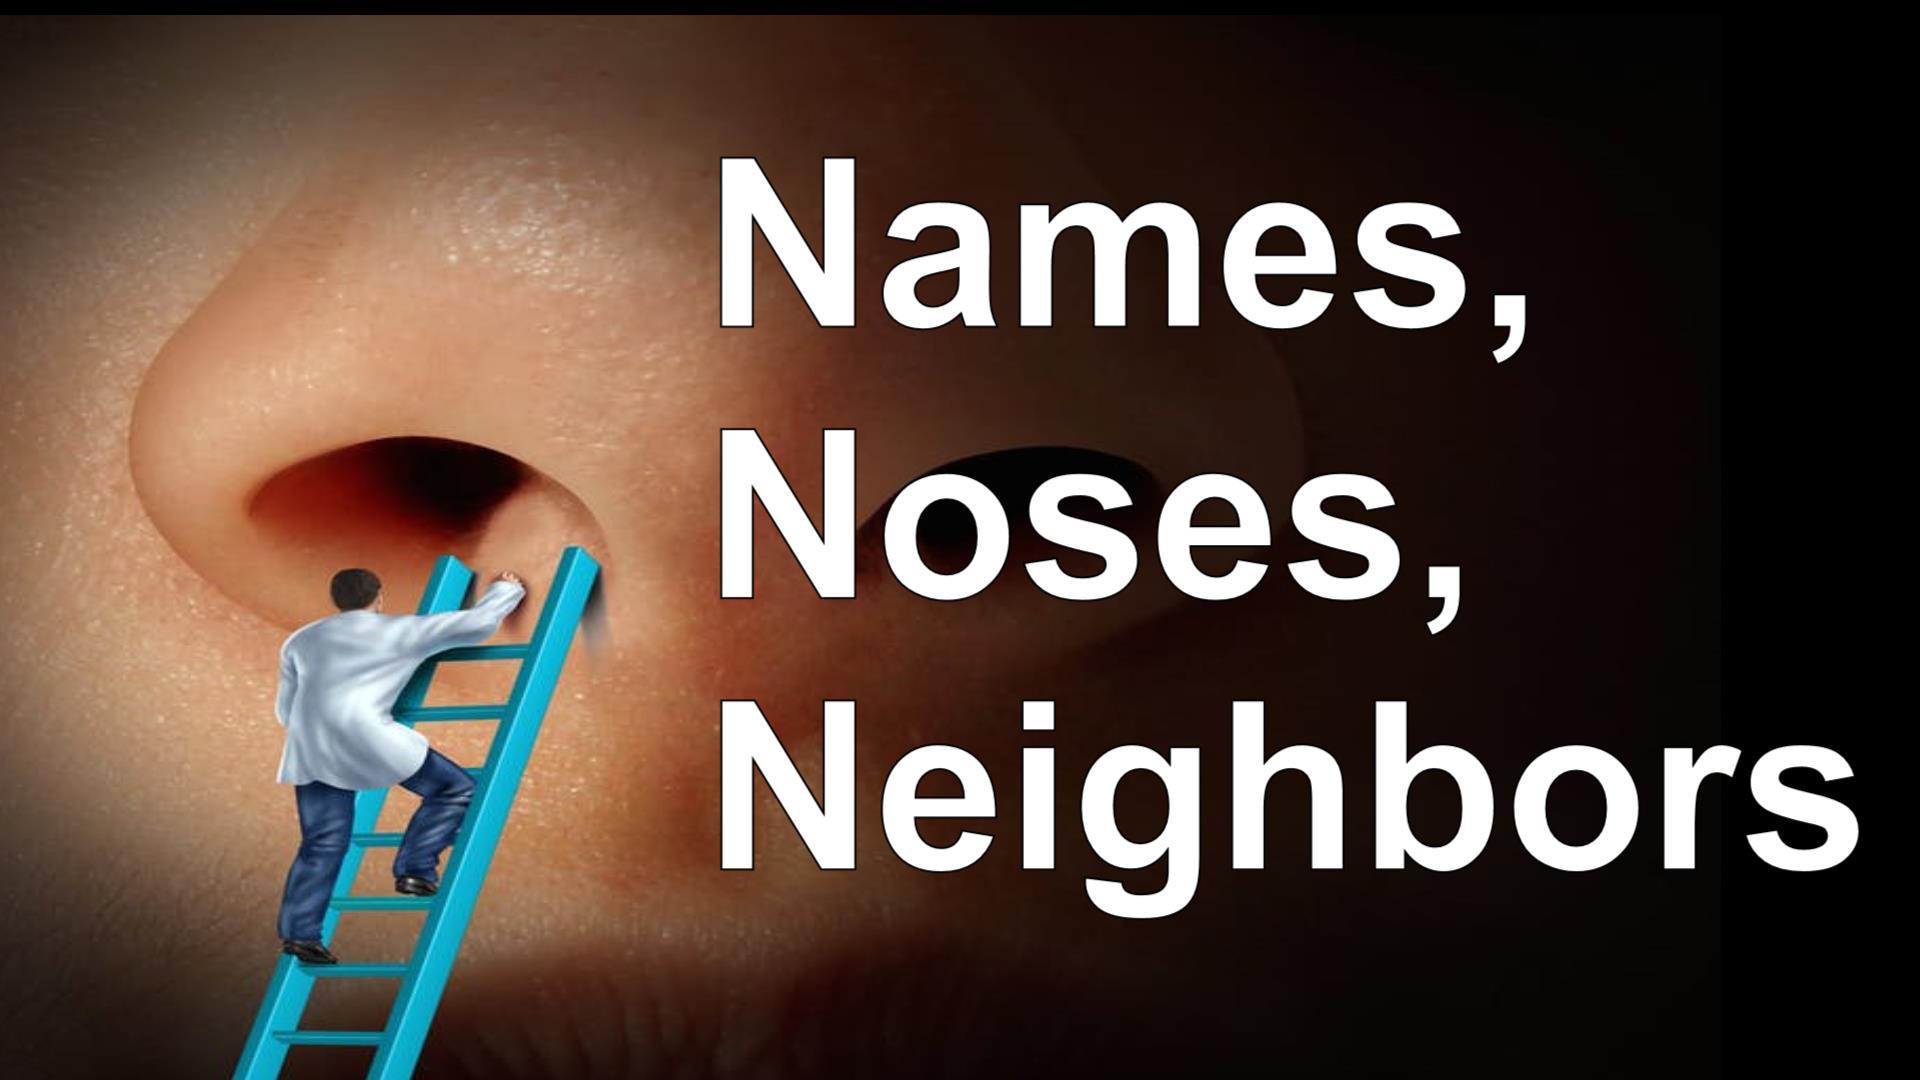 Names, Noses, Neighbors